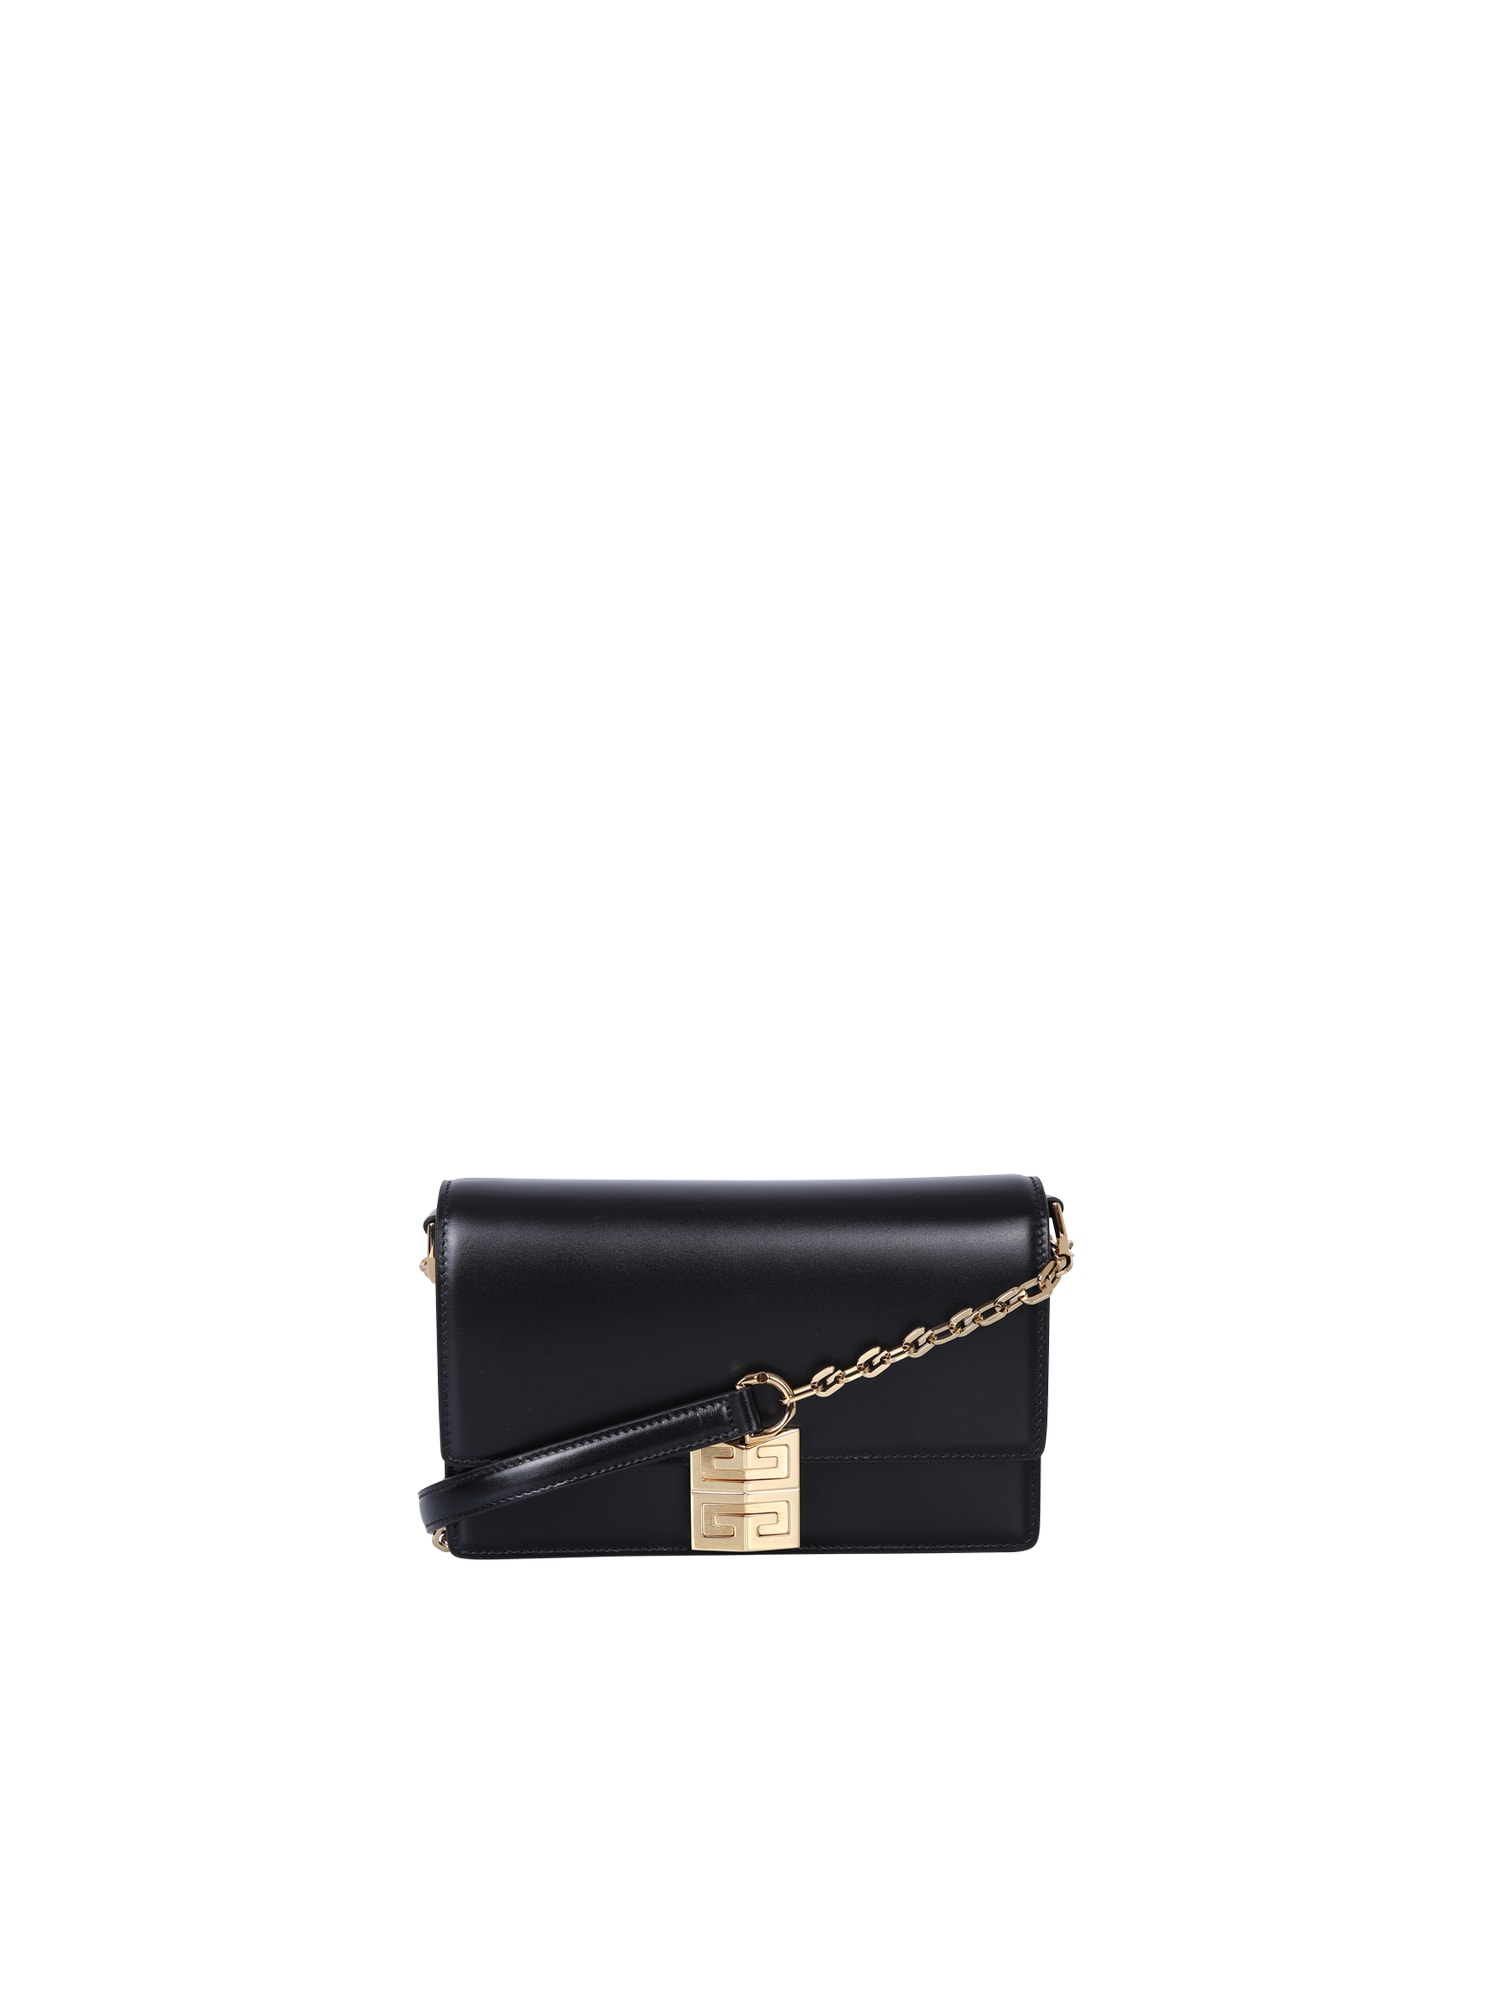 Givenchy 4g Mini Bag